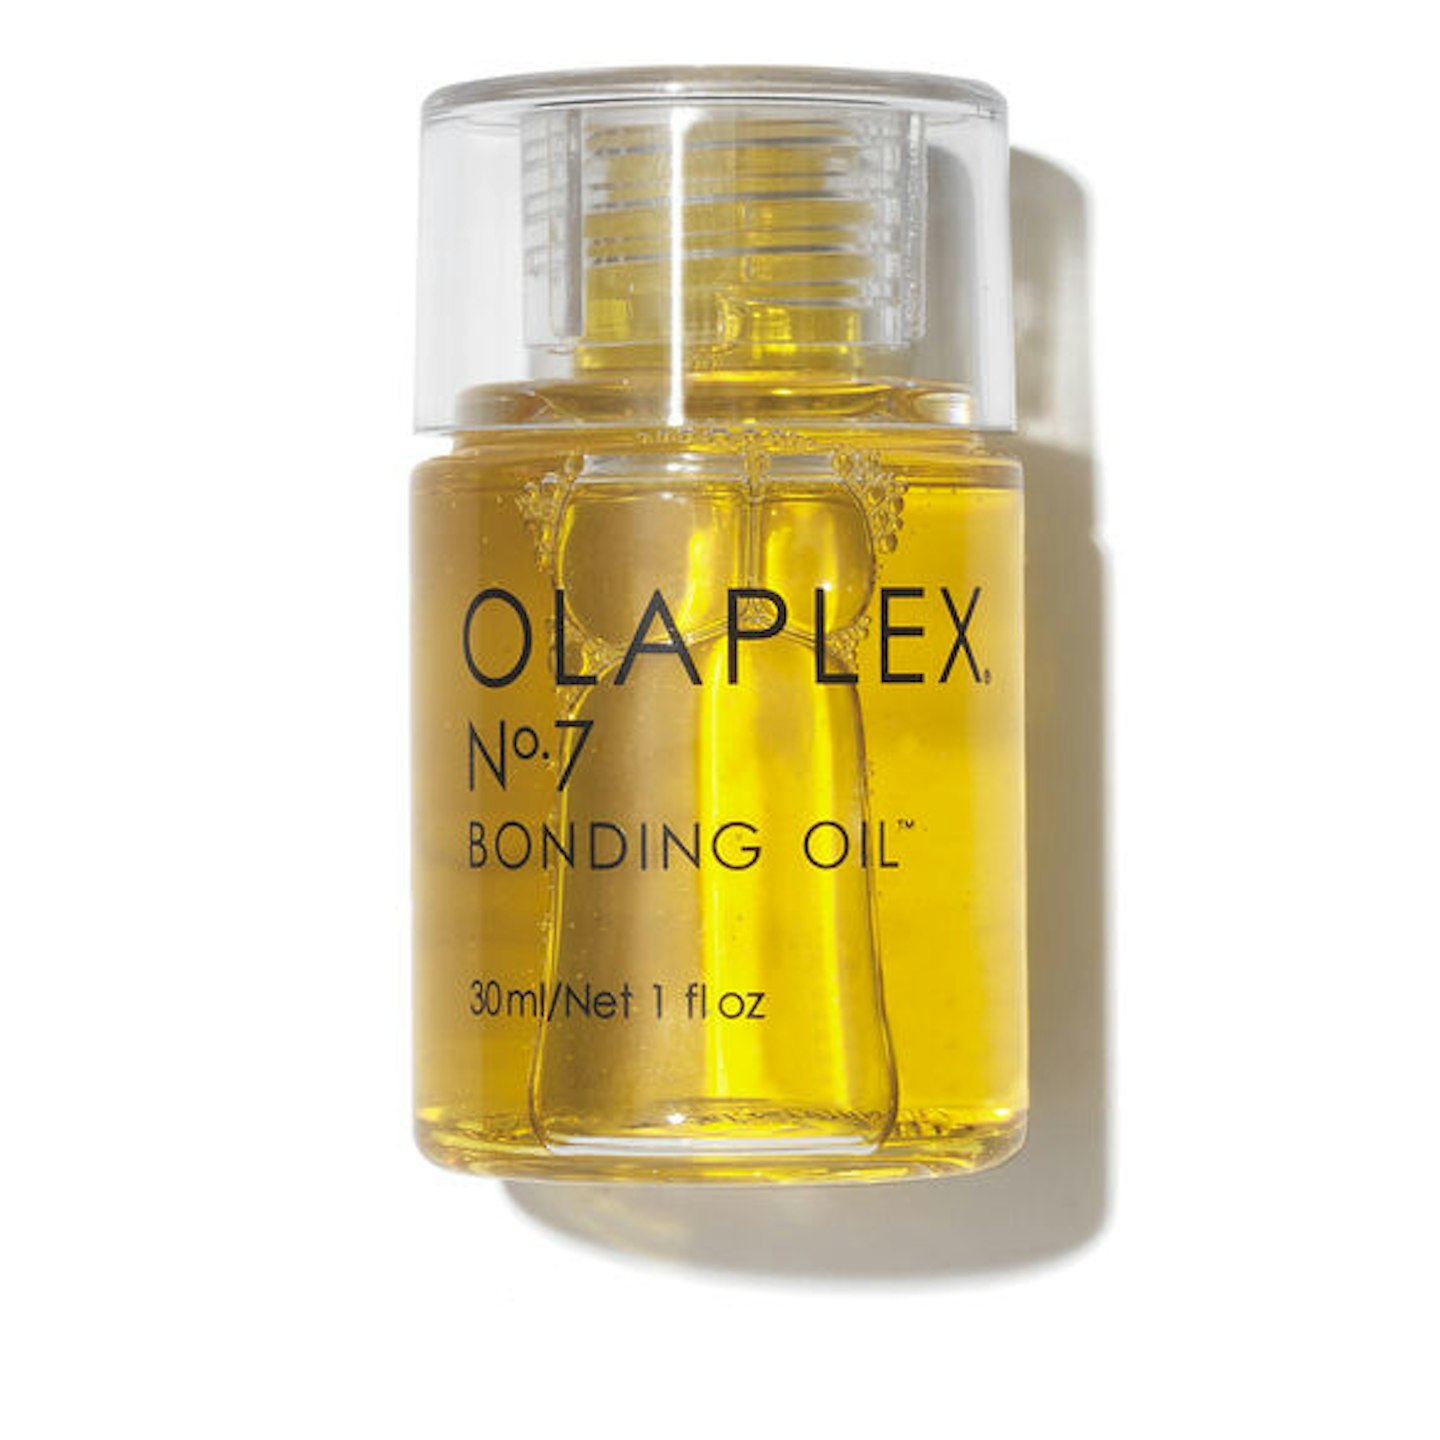 OLAPLEX, No.7 bonding oil, £28